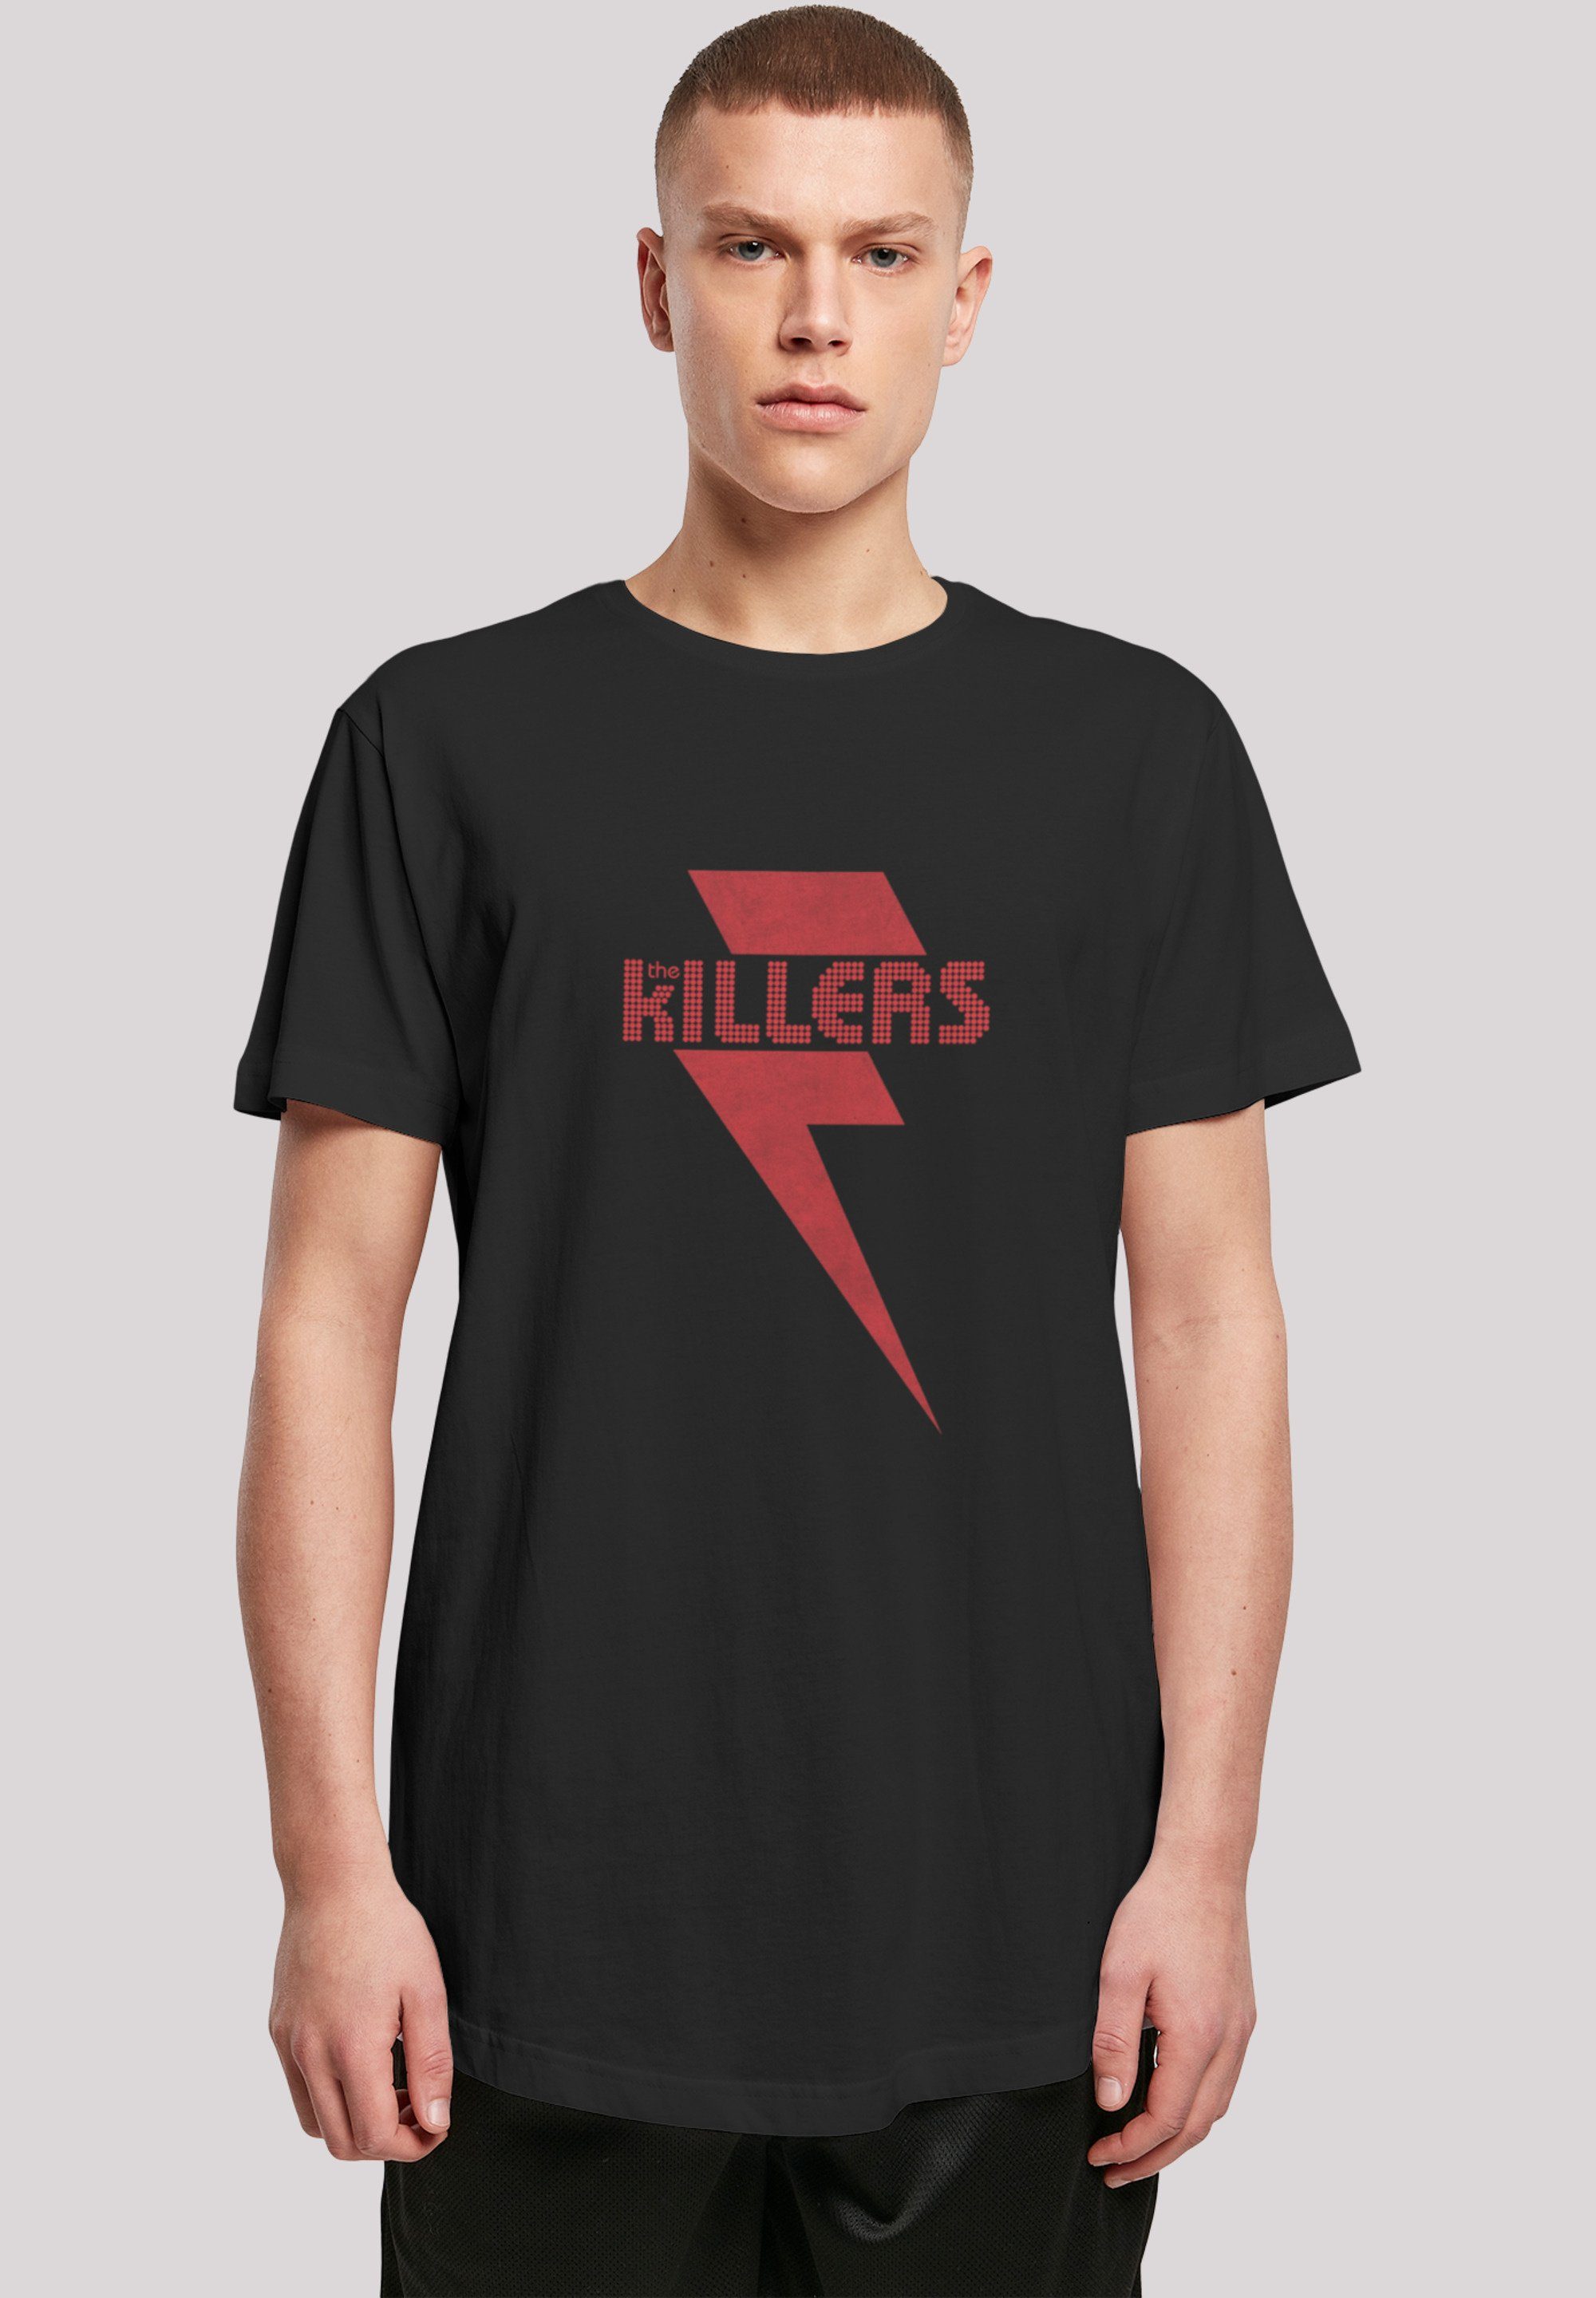 Sehr T-Shirt Band Print, Tragekomfort mit hohem Baumwollstoff Bolt Rock Killers weicher The Red F4NT4STIC